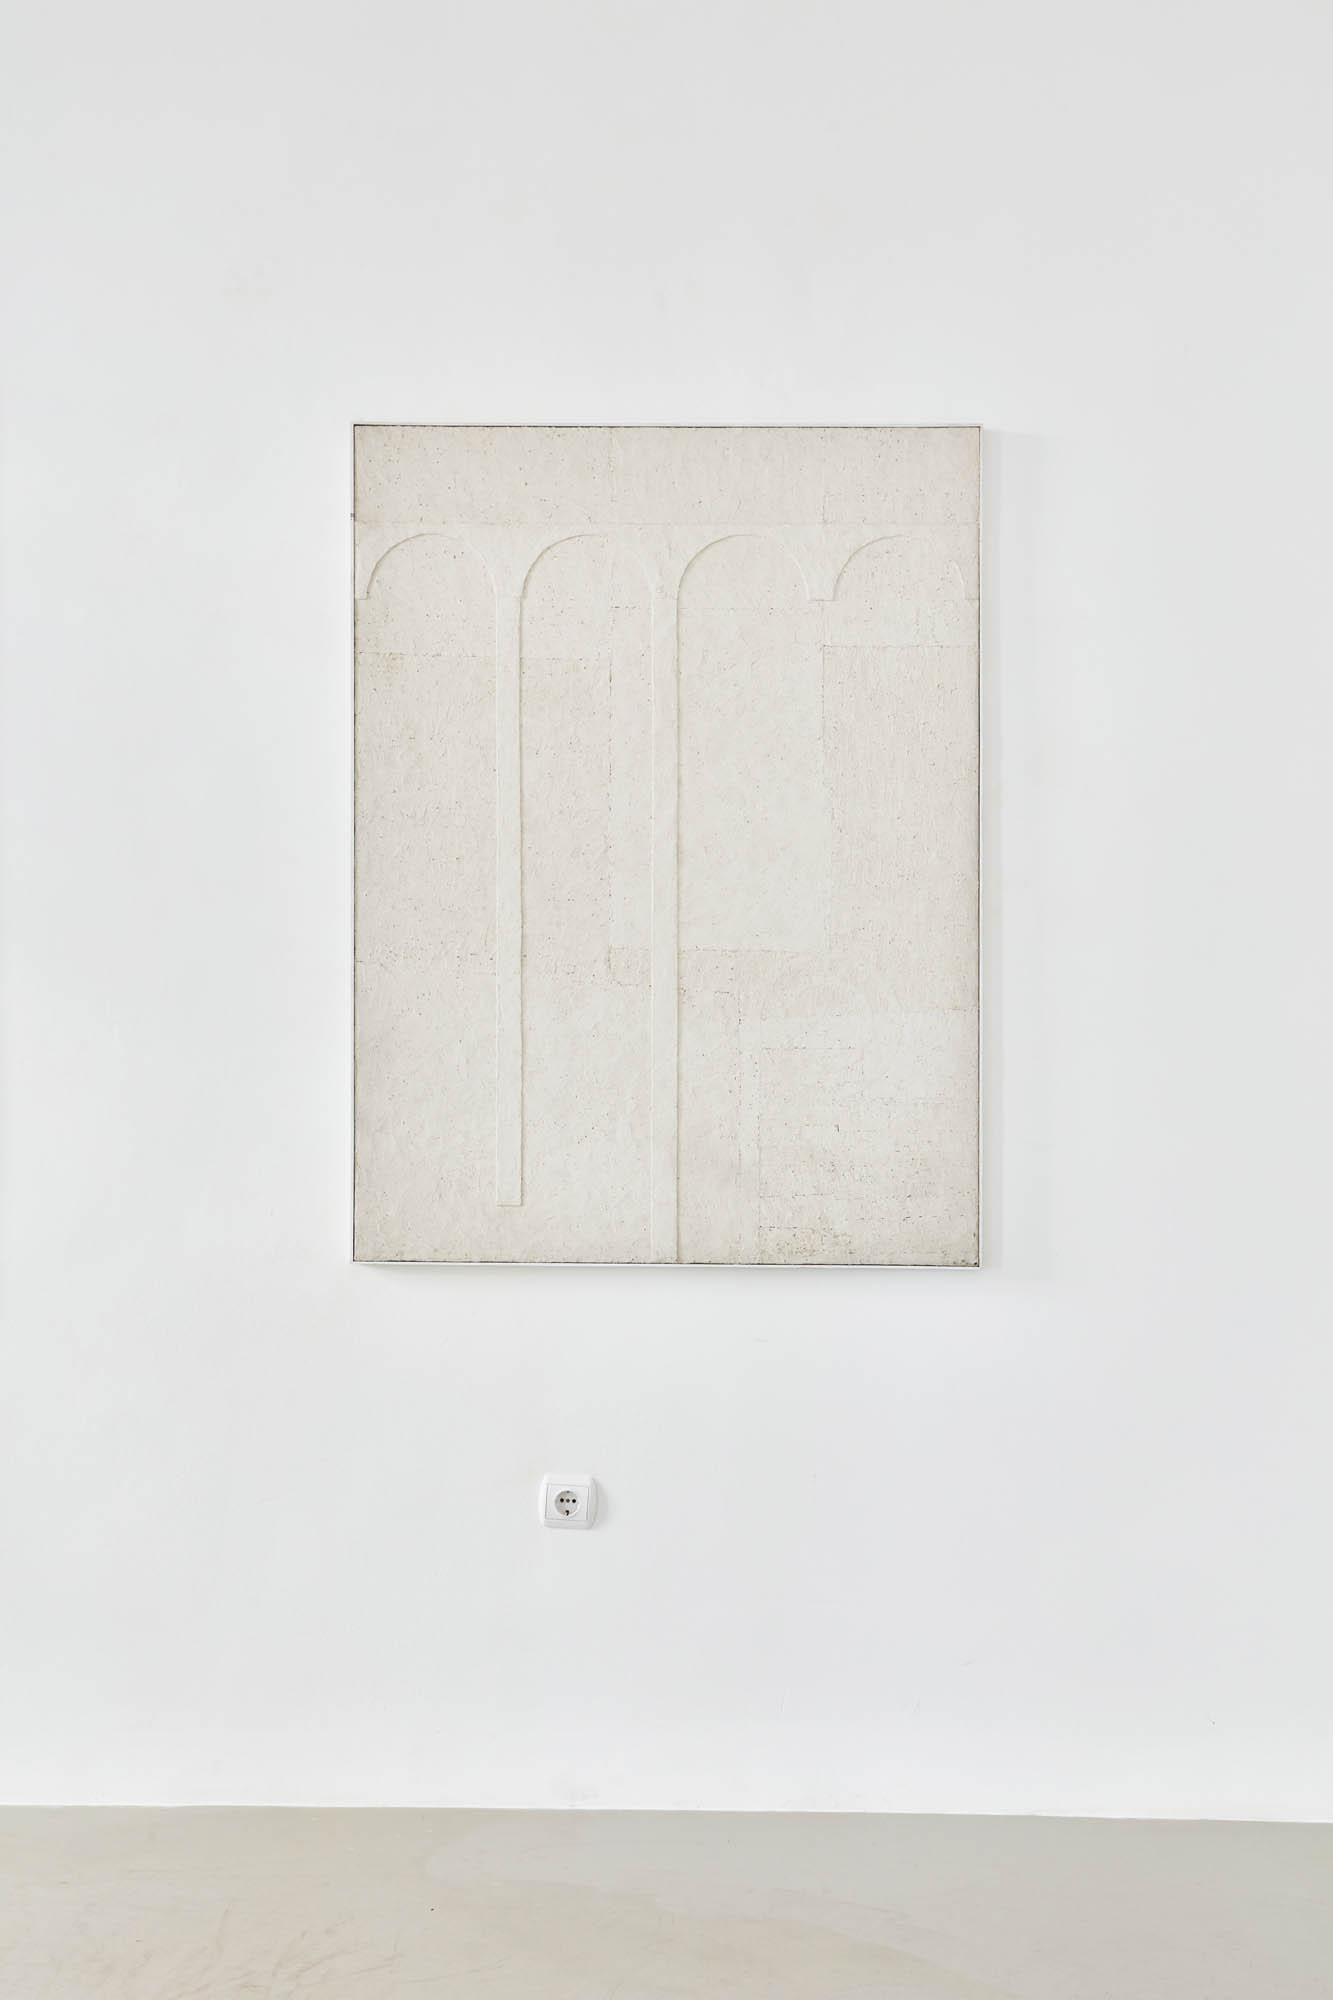 Anna MARK: R 20, 1991, relief, 130 x 97 cm